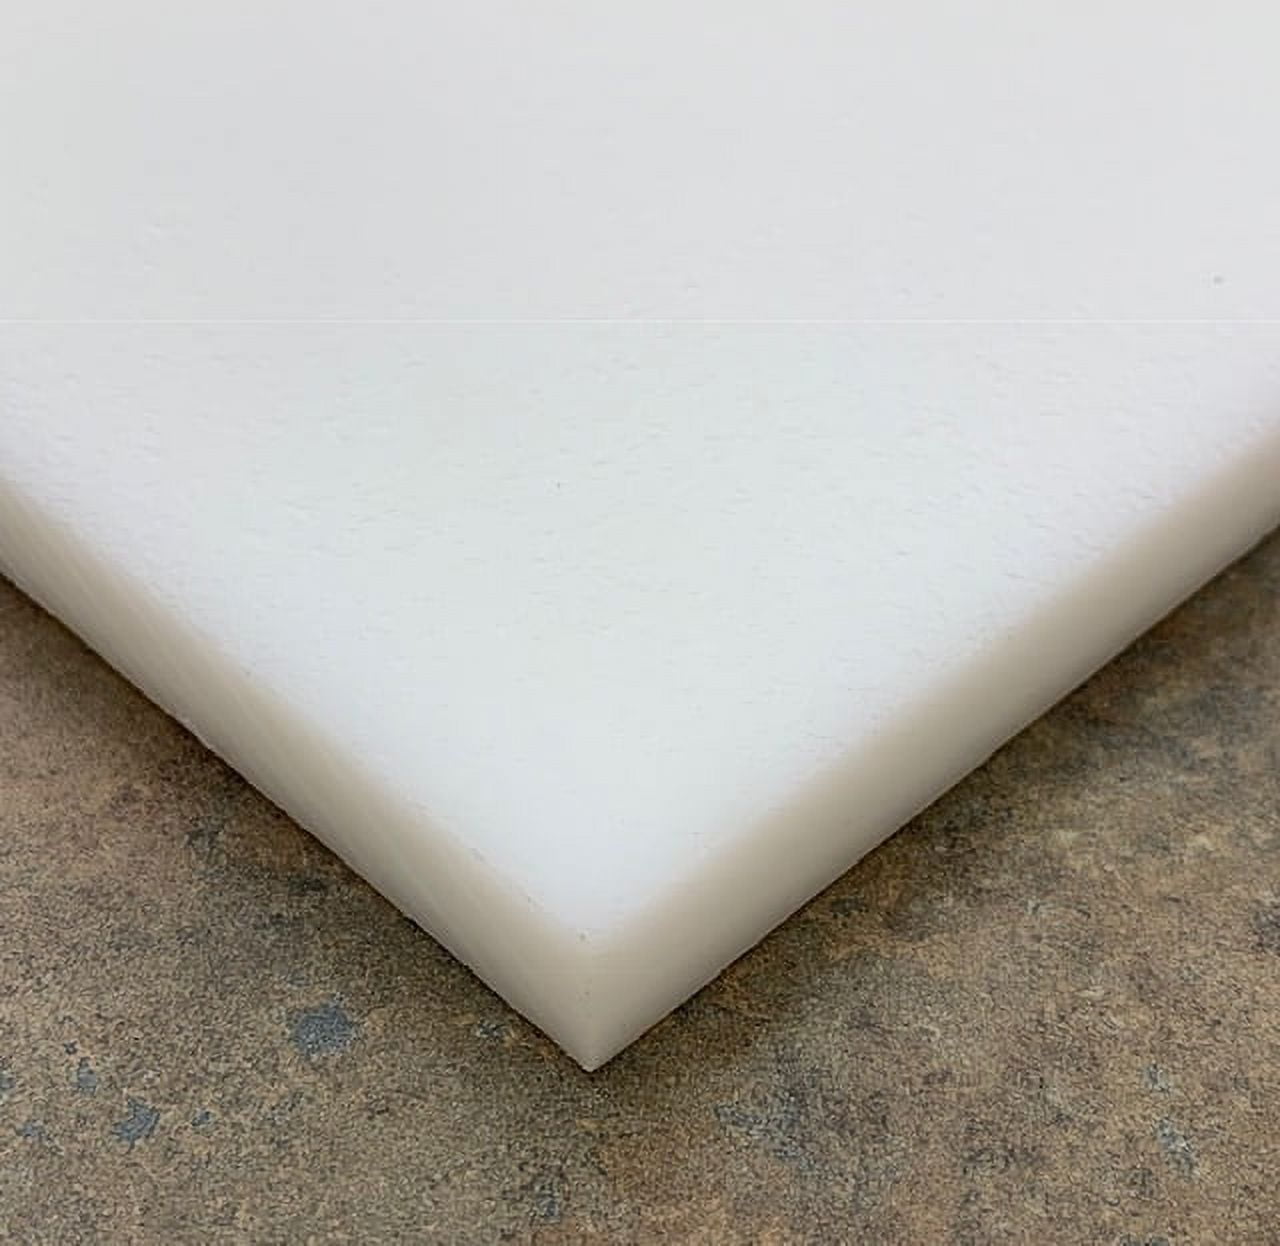 1 Thick White Custom Cutting Board